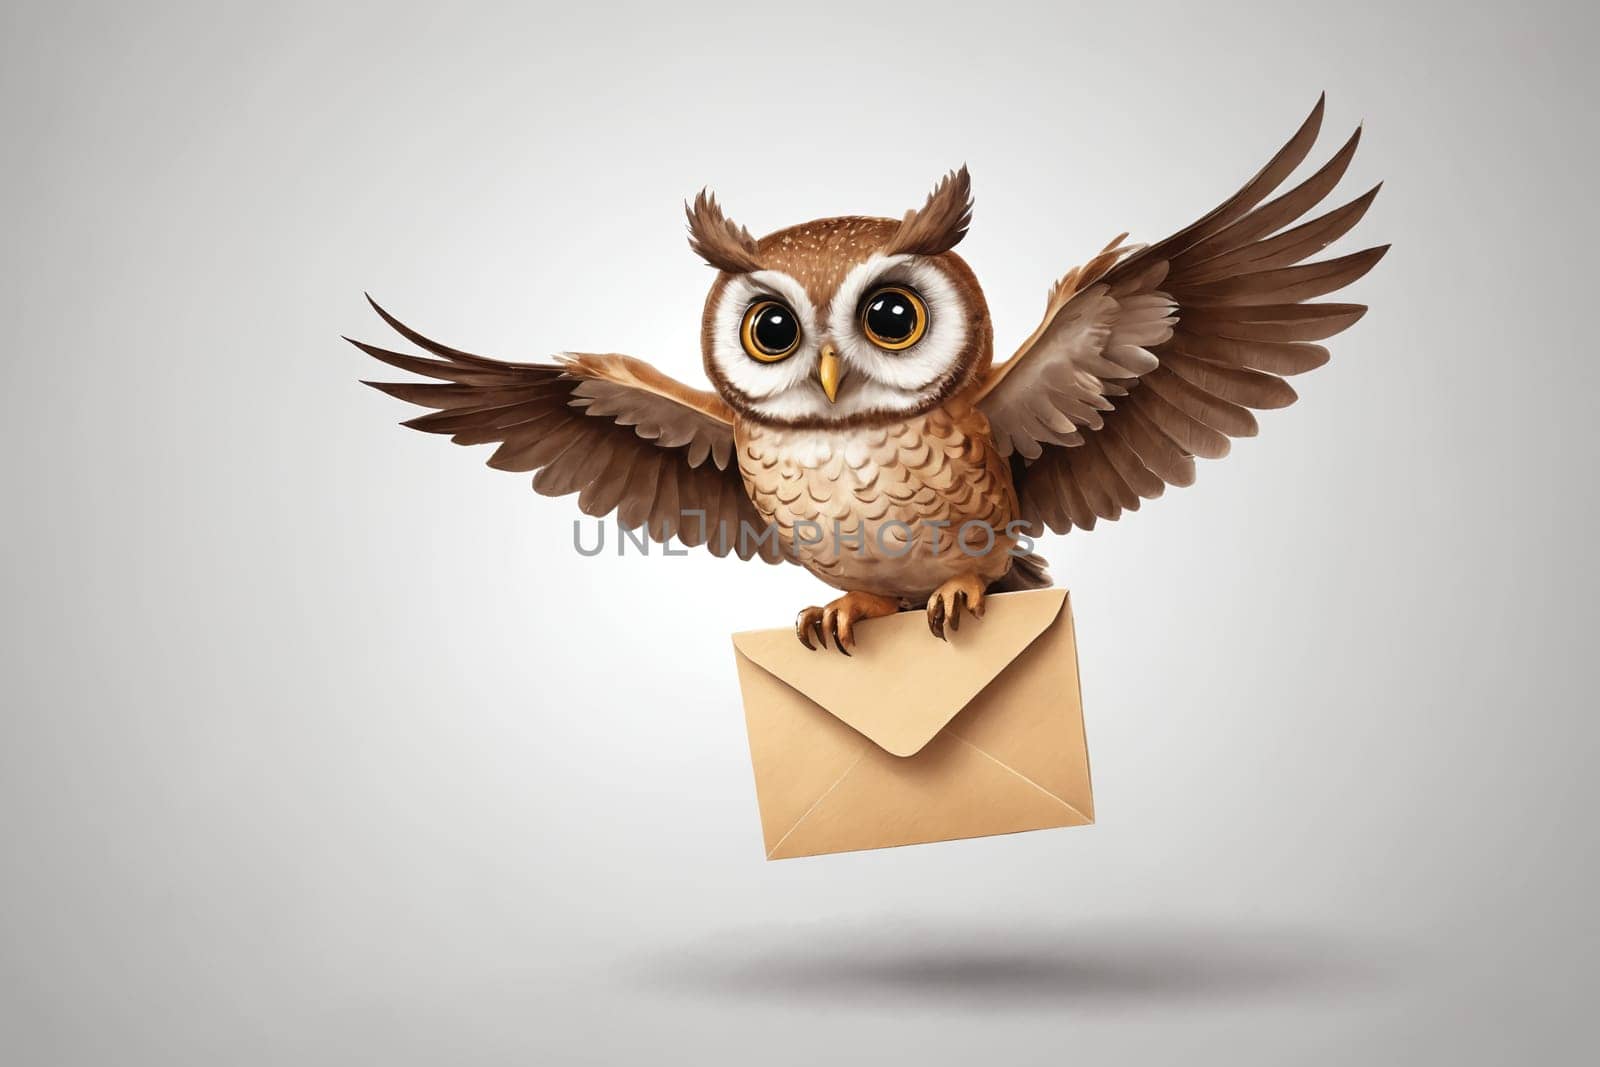 Night Messenger: Majestic Owl Delivering Envelope by Andre1ns